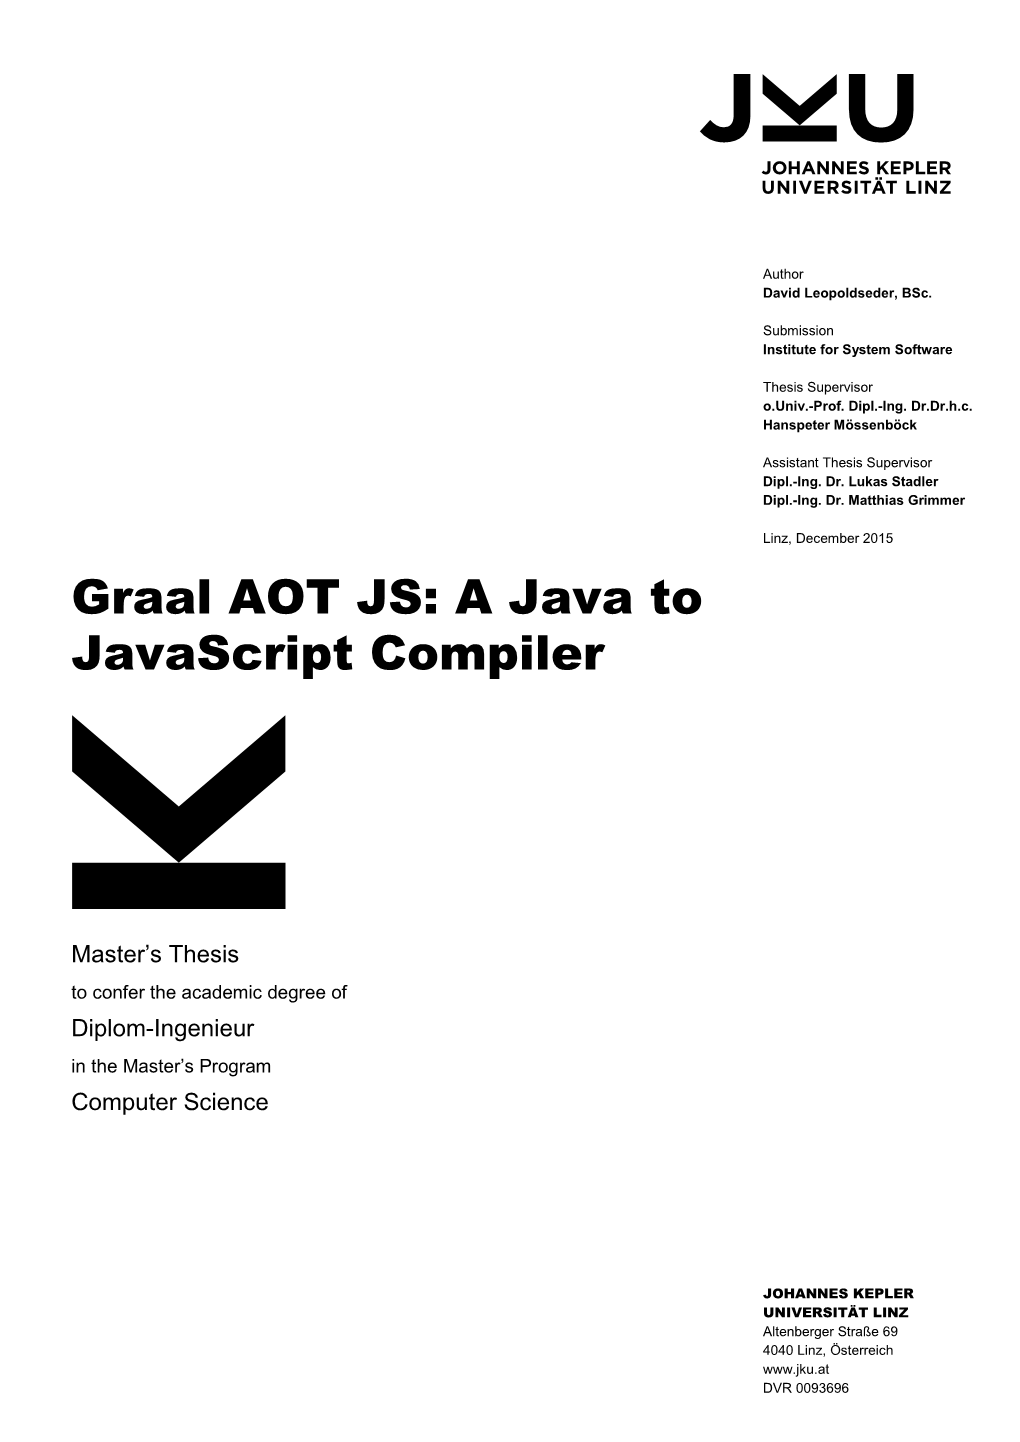 Graal AOT JS: a Java to Javascript Compiler